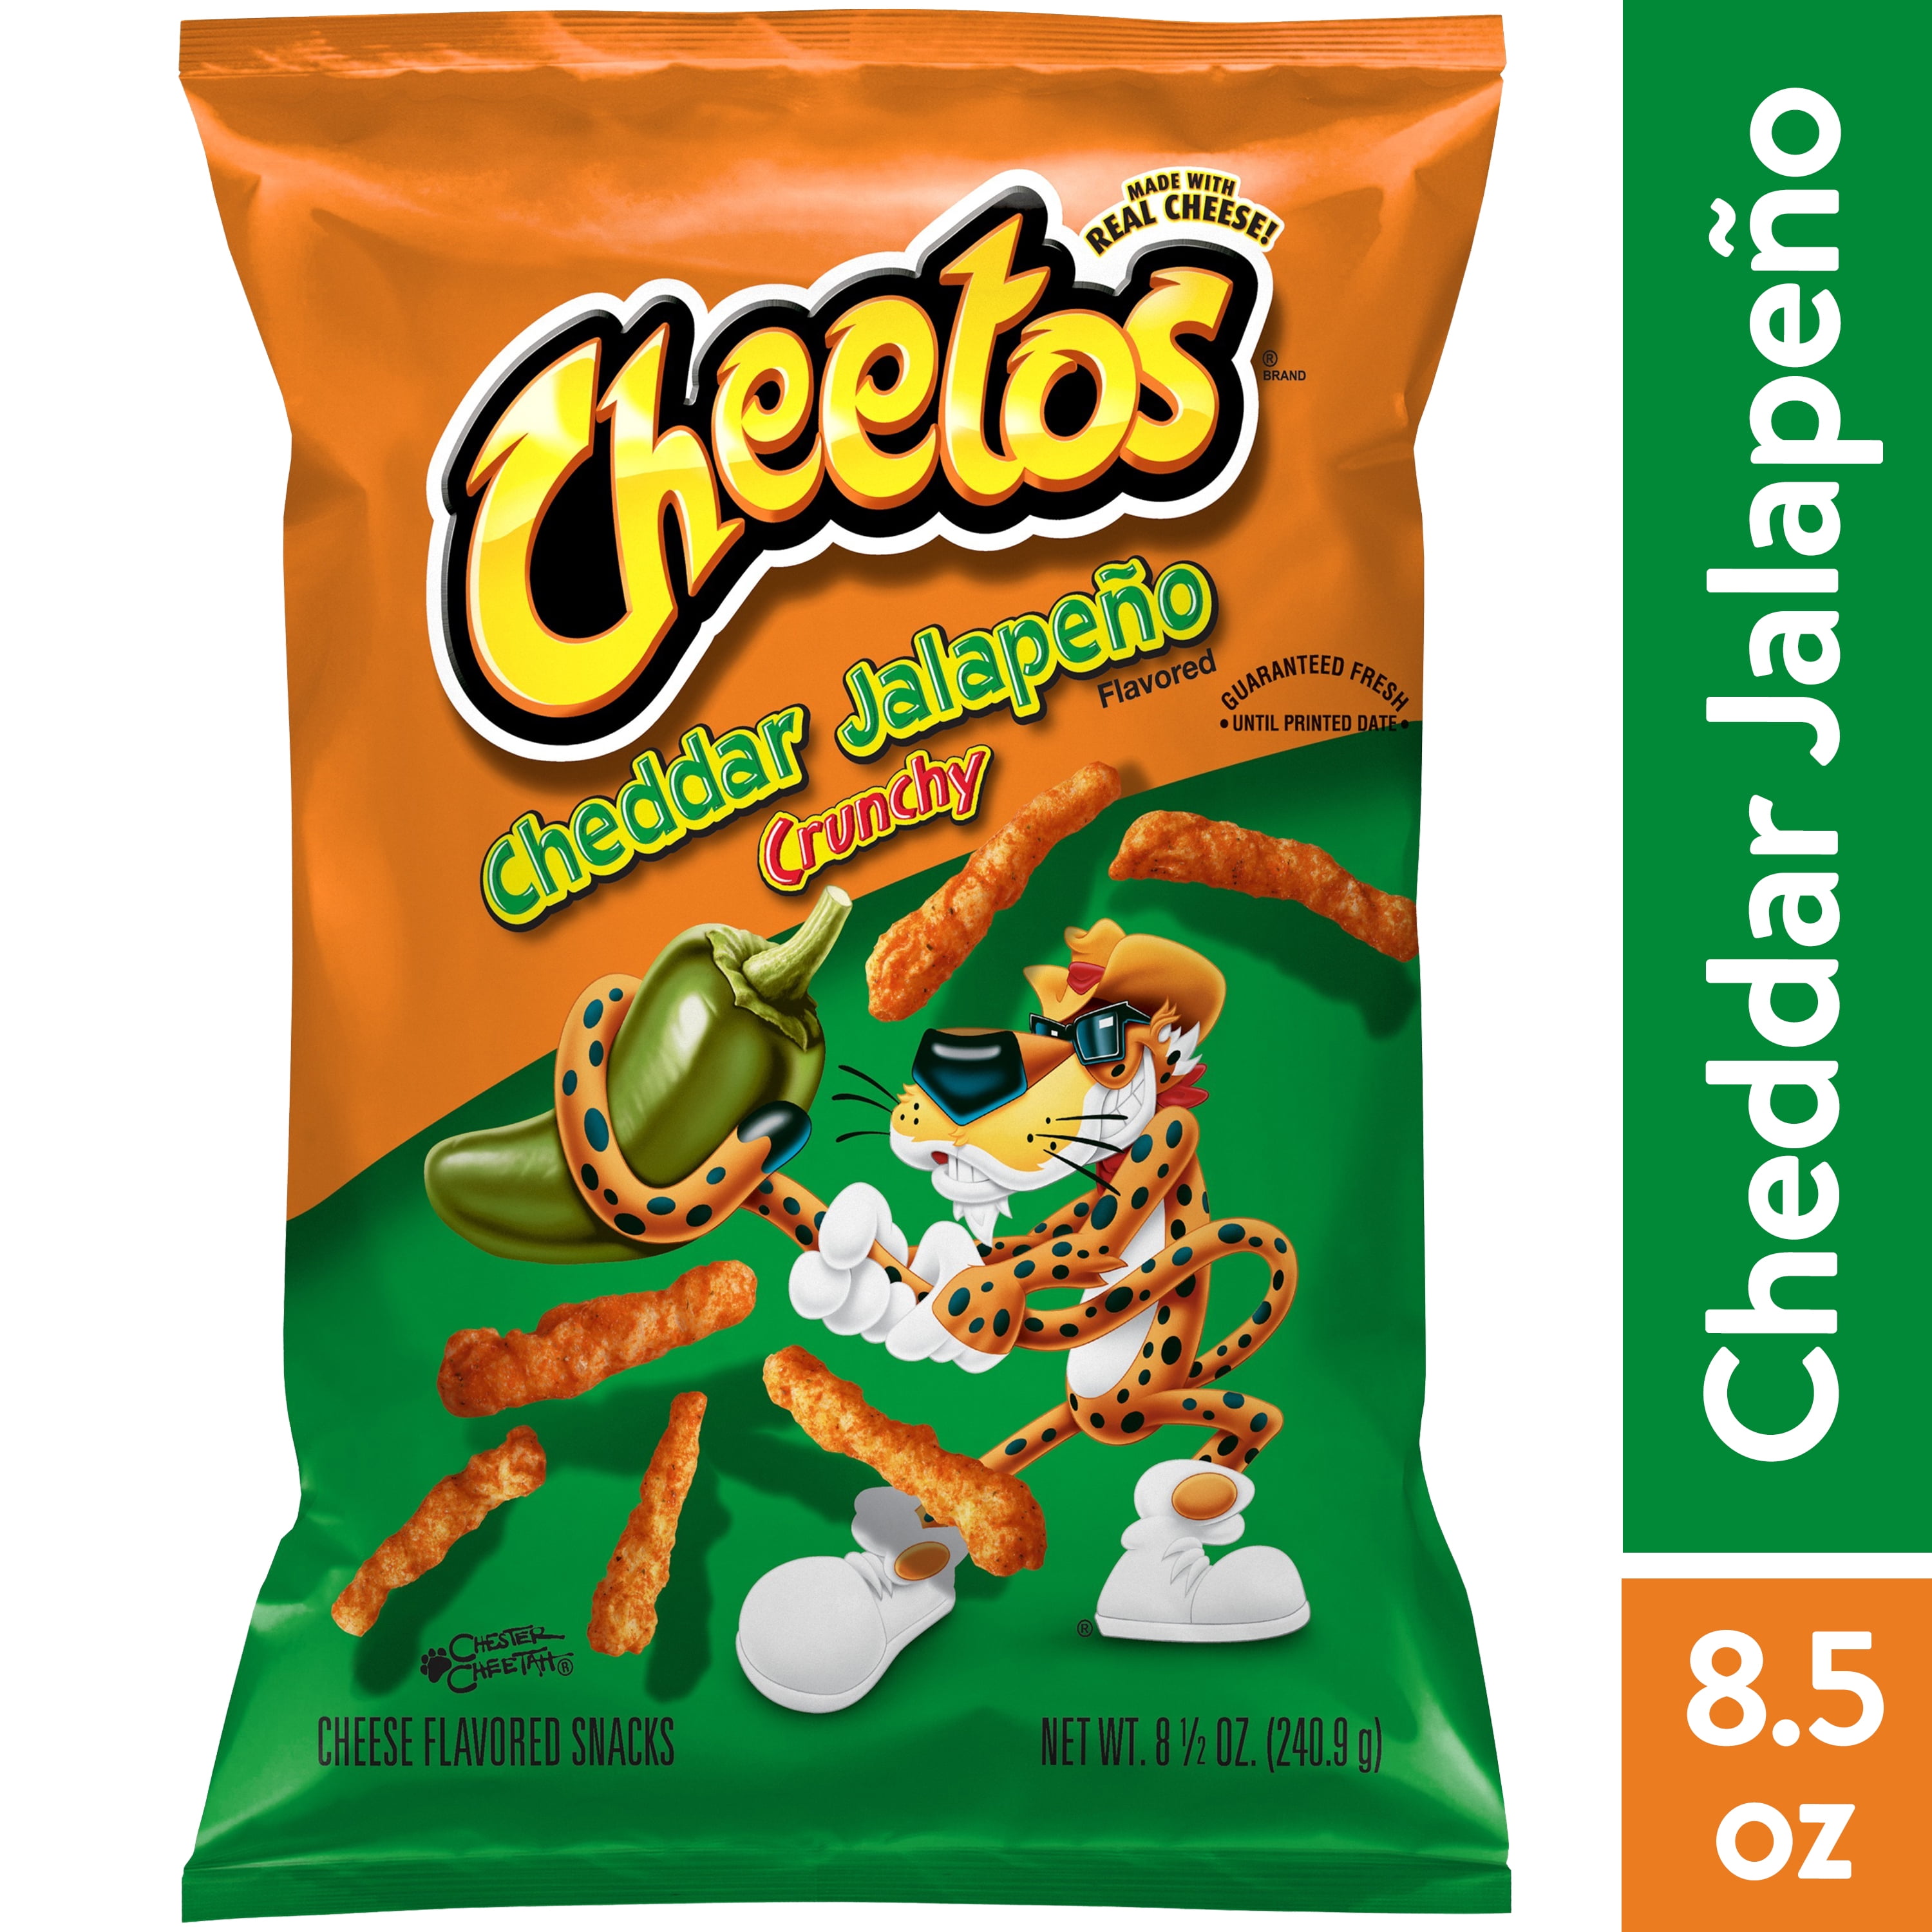 Cheetos Crunchy Cheddar Jalapeno Cheese Snacks, 8.5 oz - Walmart.com.